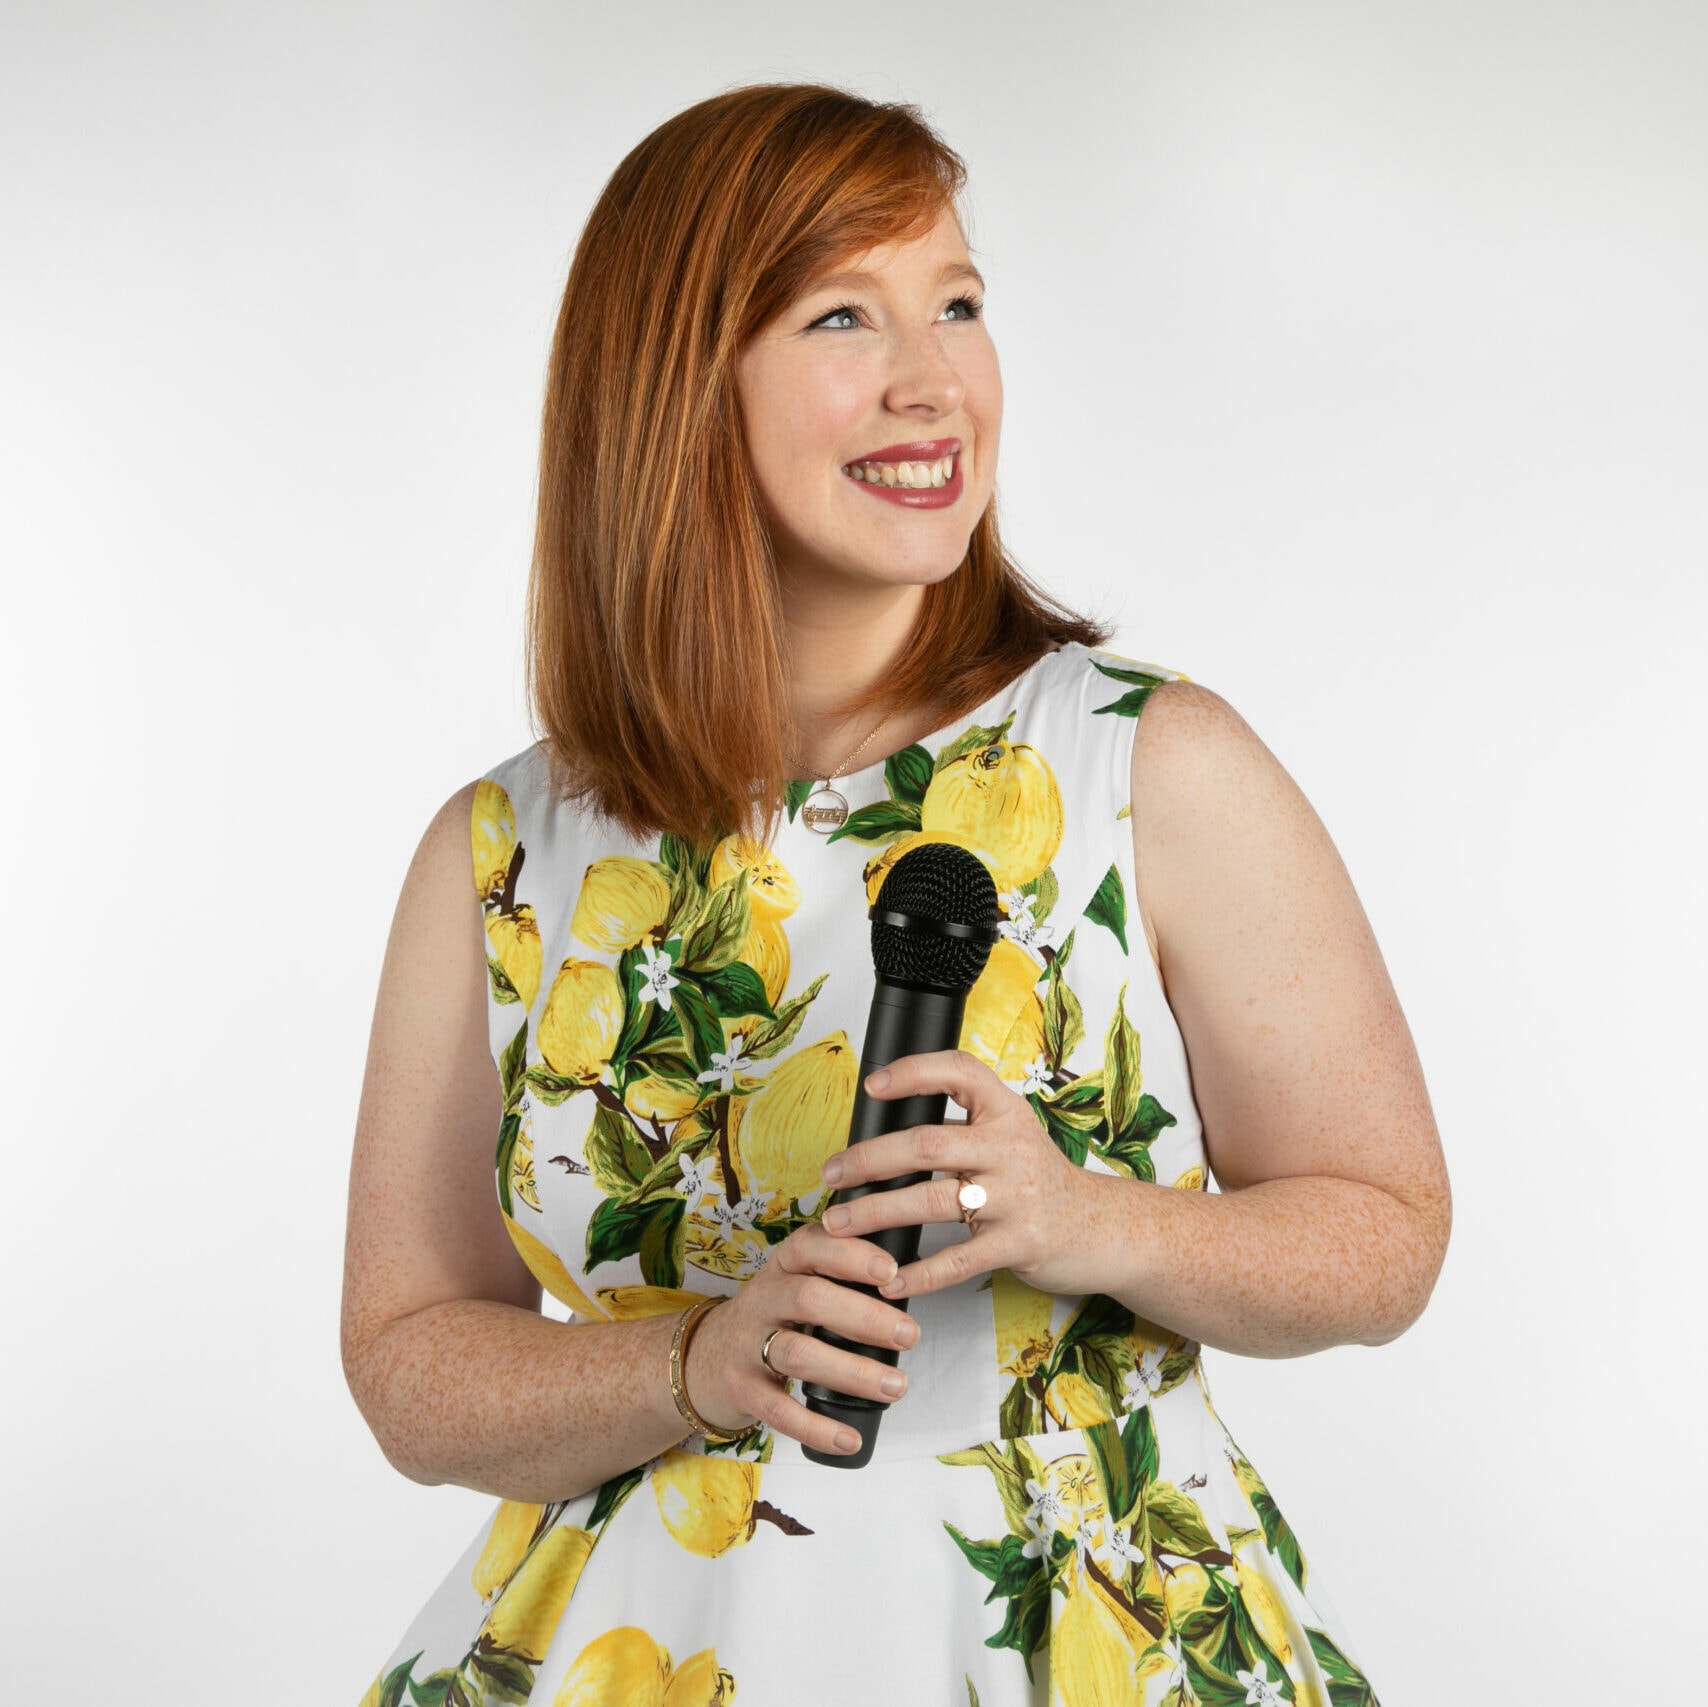 Christa i gul kjole med mikrofon